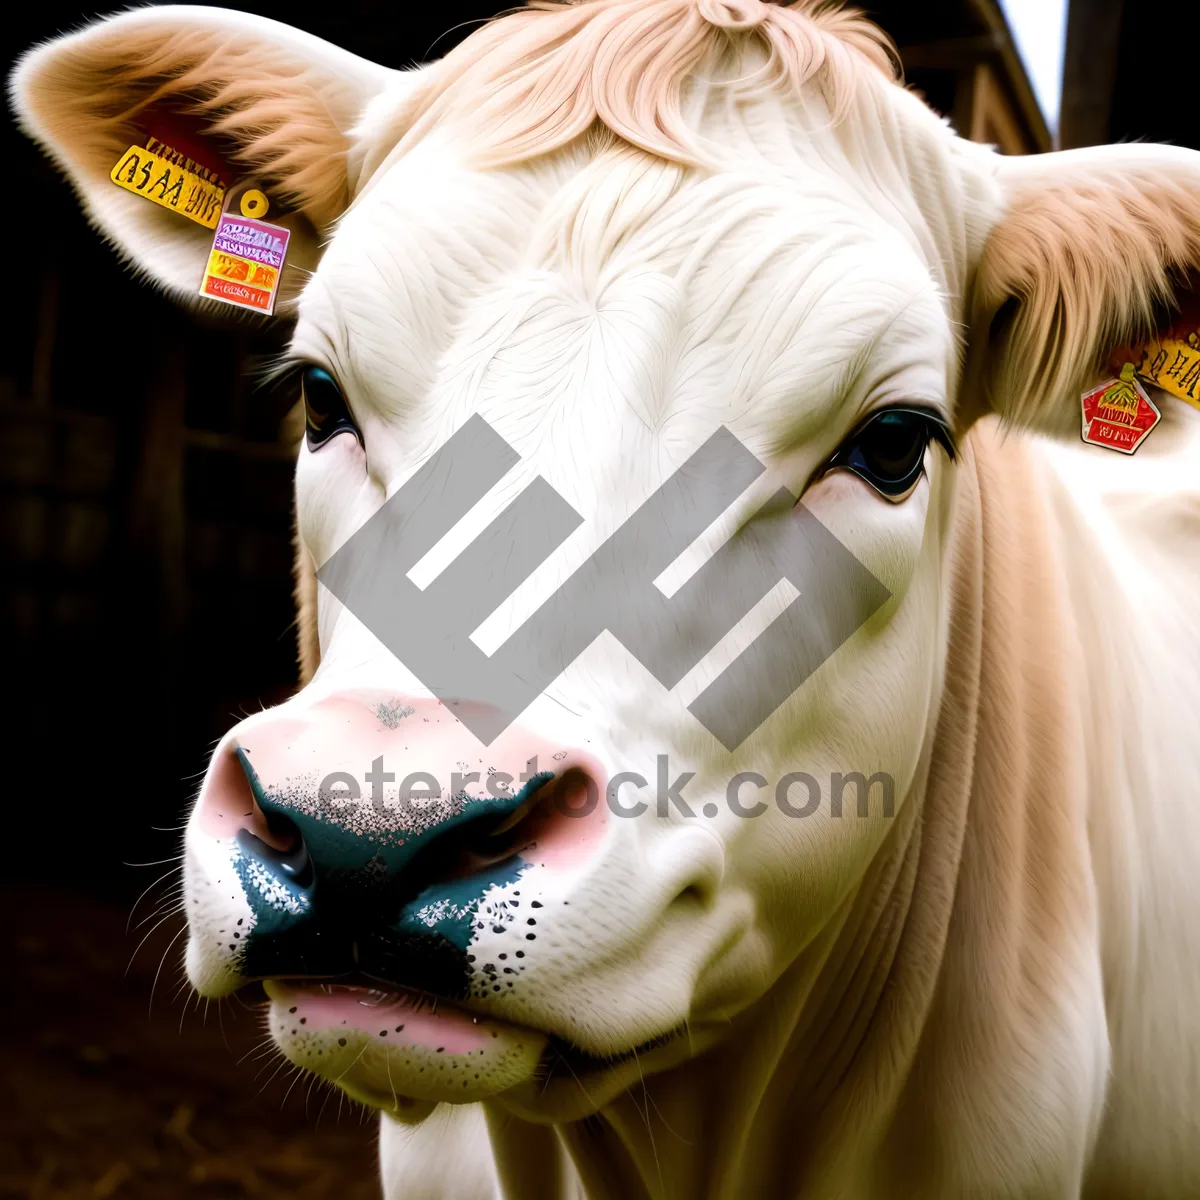 Picture of Pasture-raised calf on rural farm